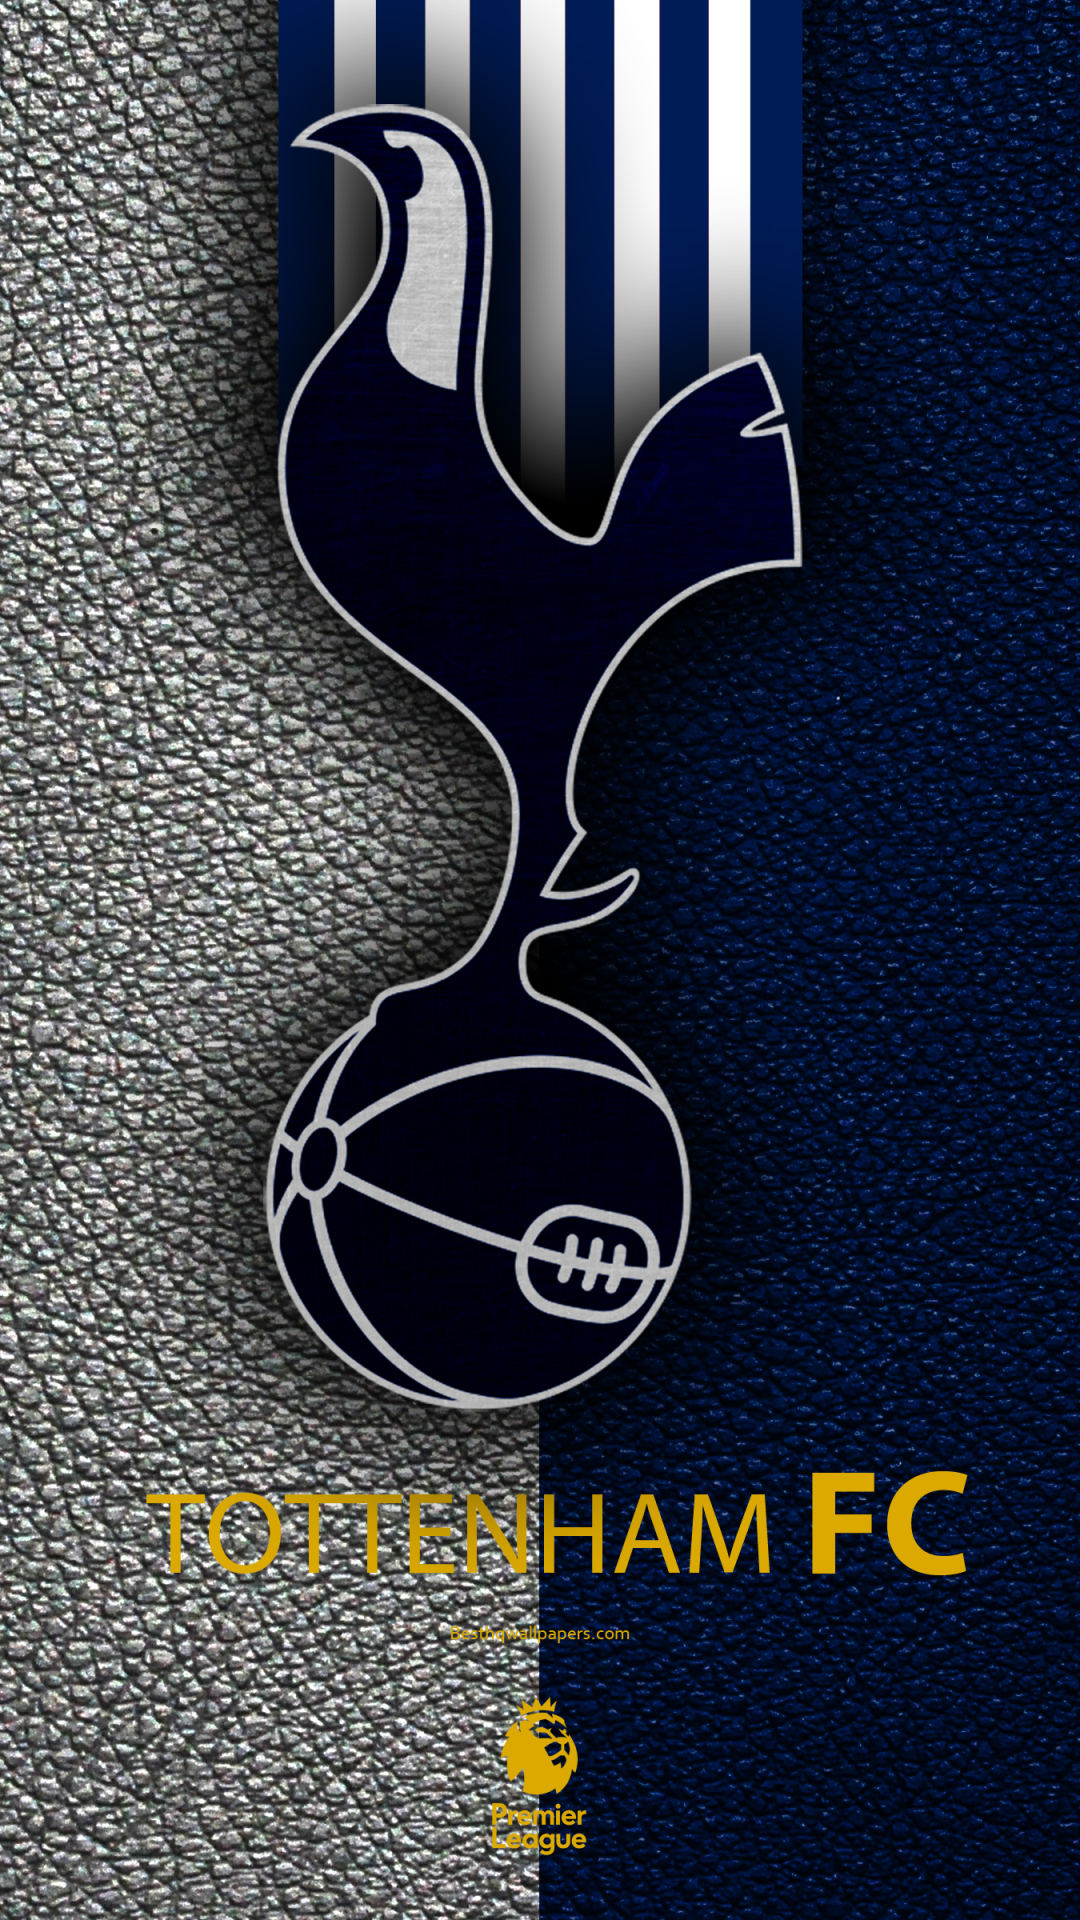 tottenham hotspur f c, sports, soccer, logo mobile wallpaper